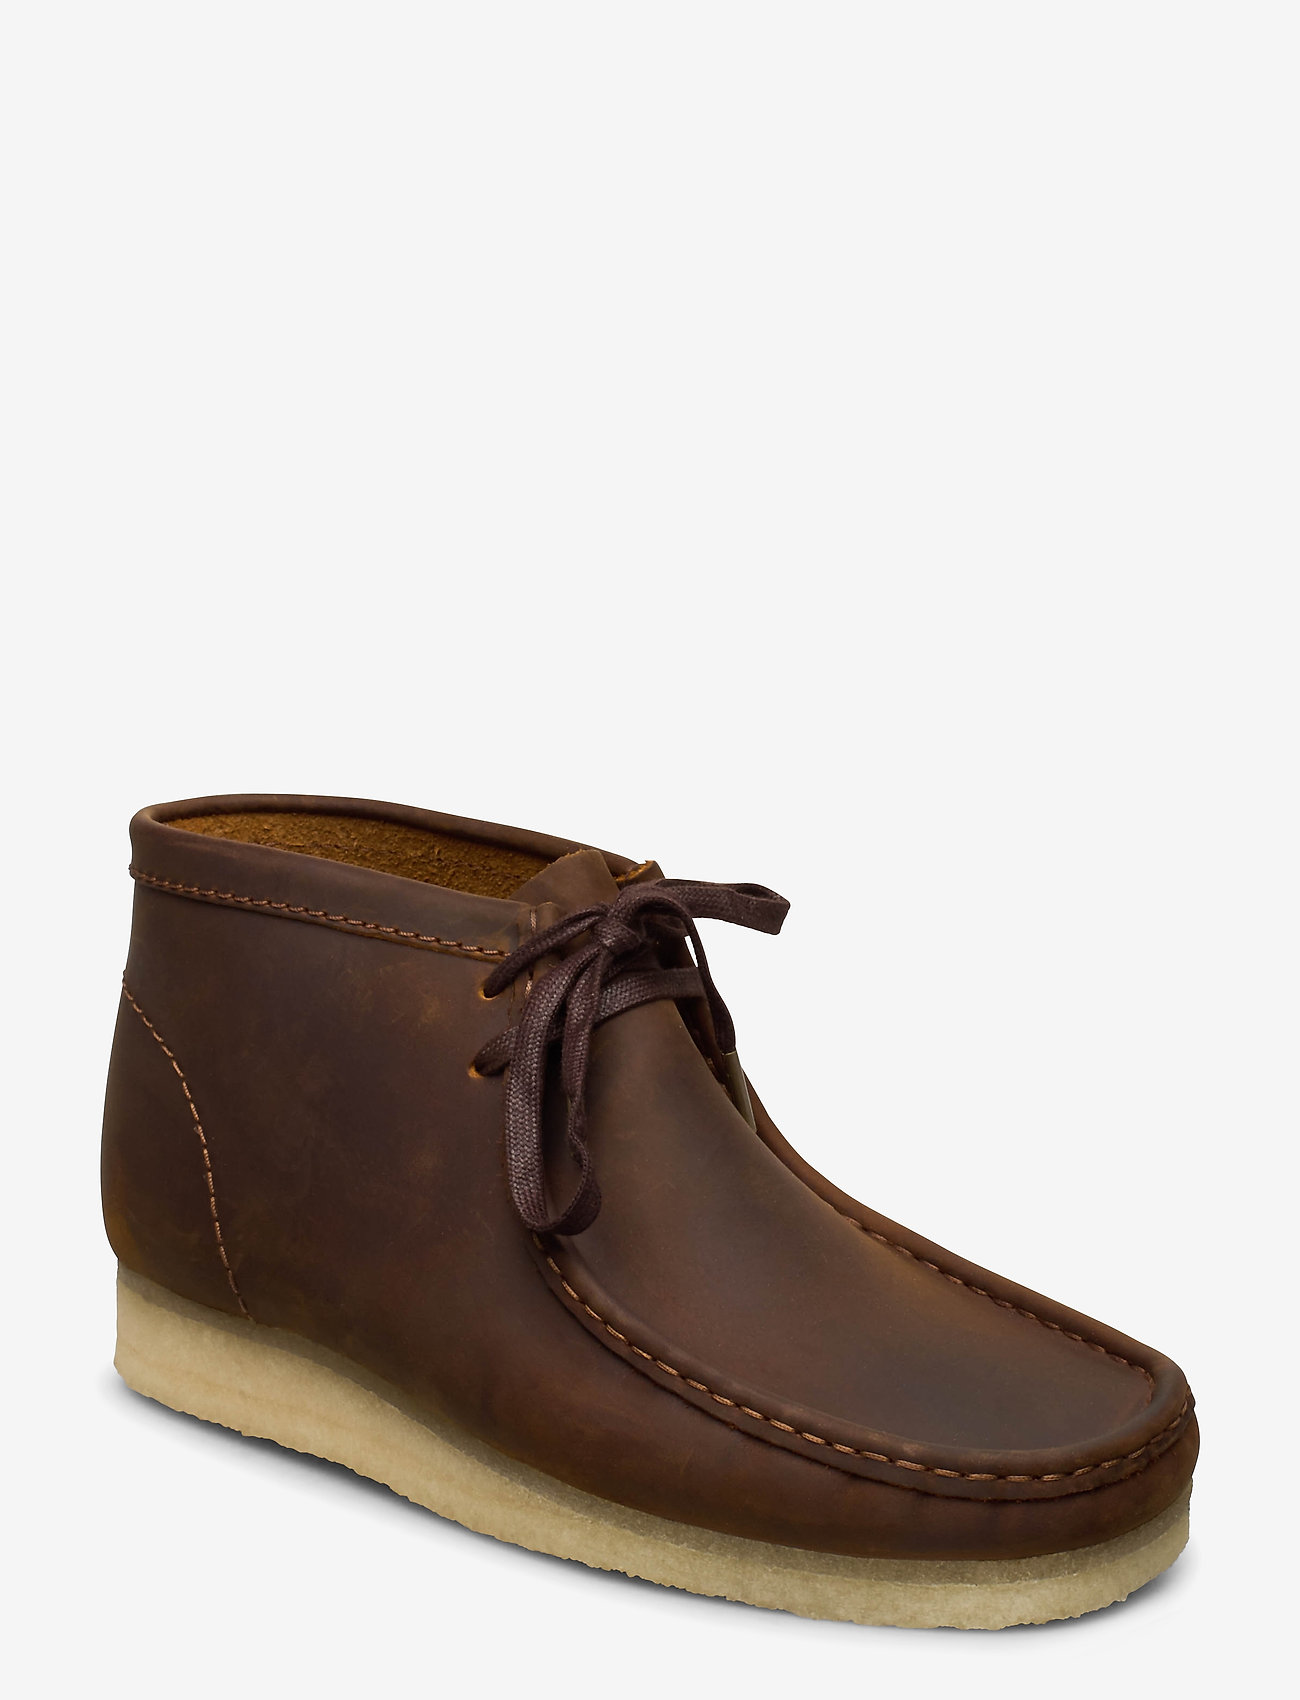 Clarks Originals Wallabee Boot - Desert boots |